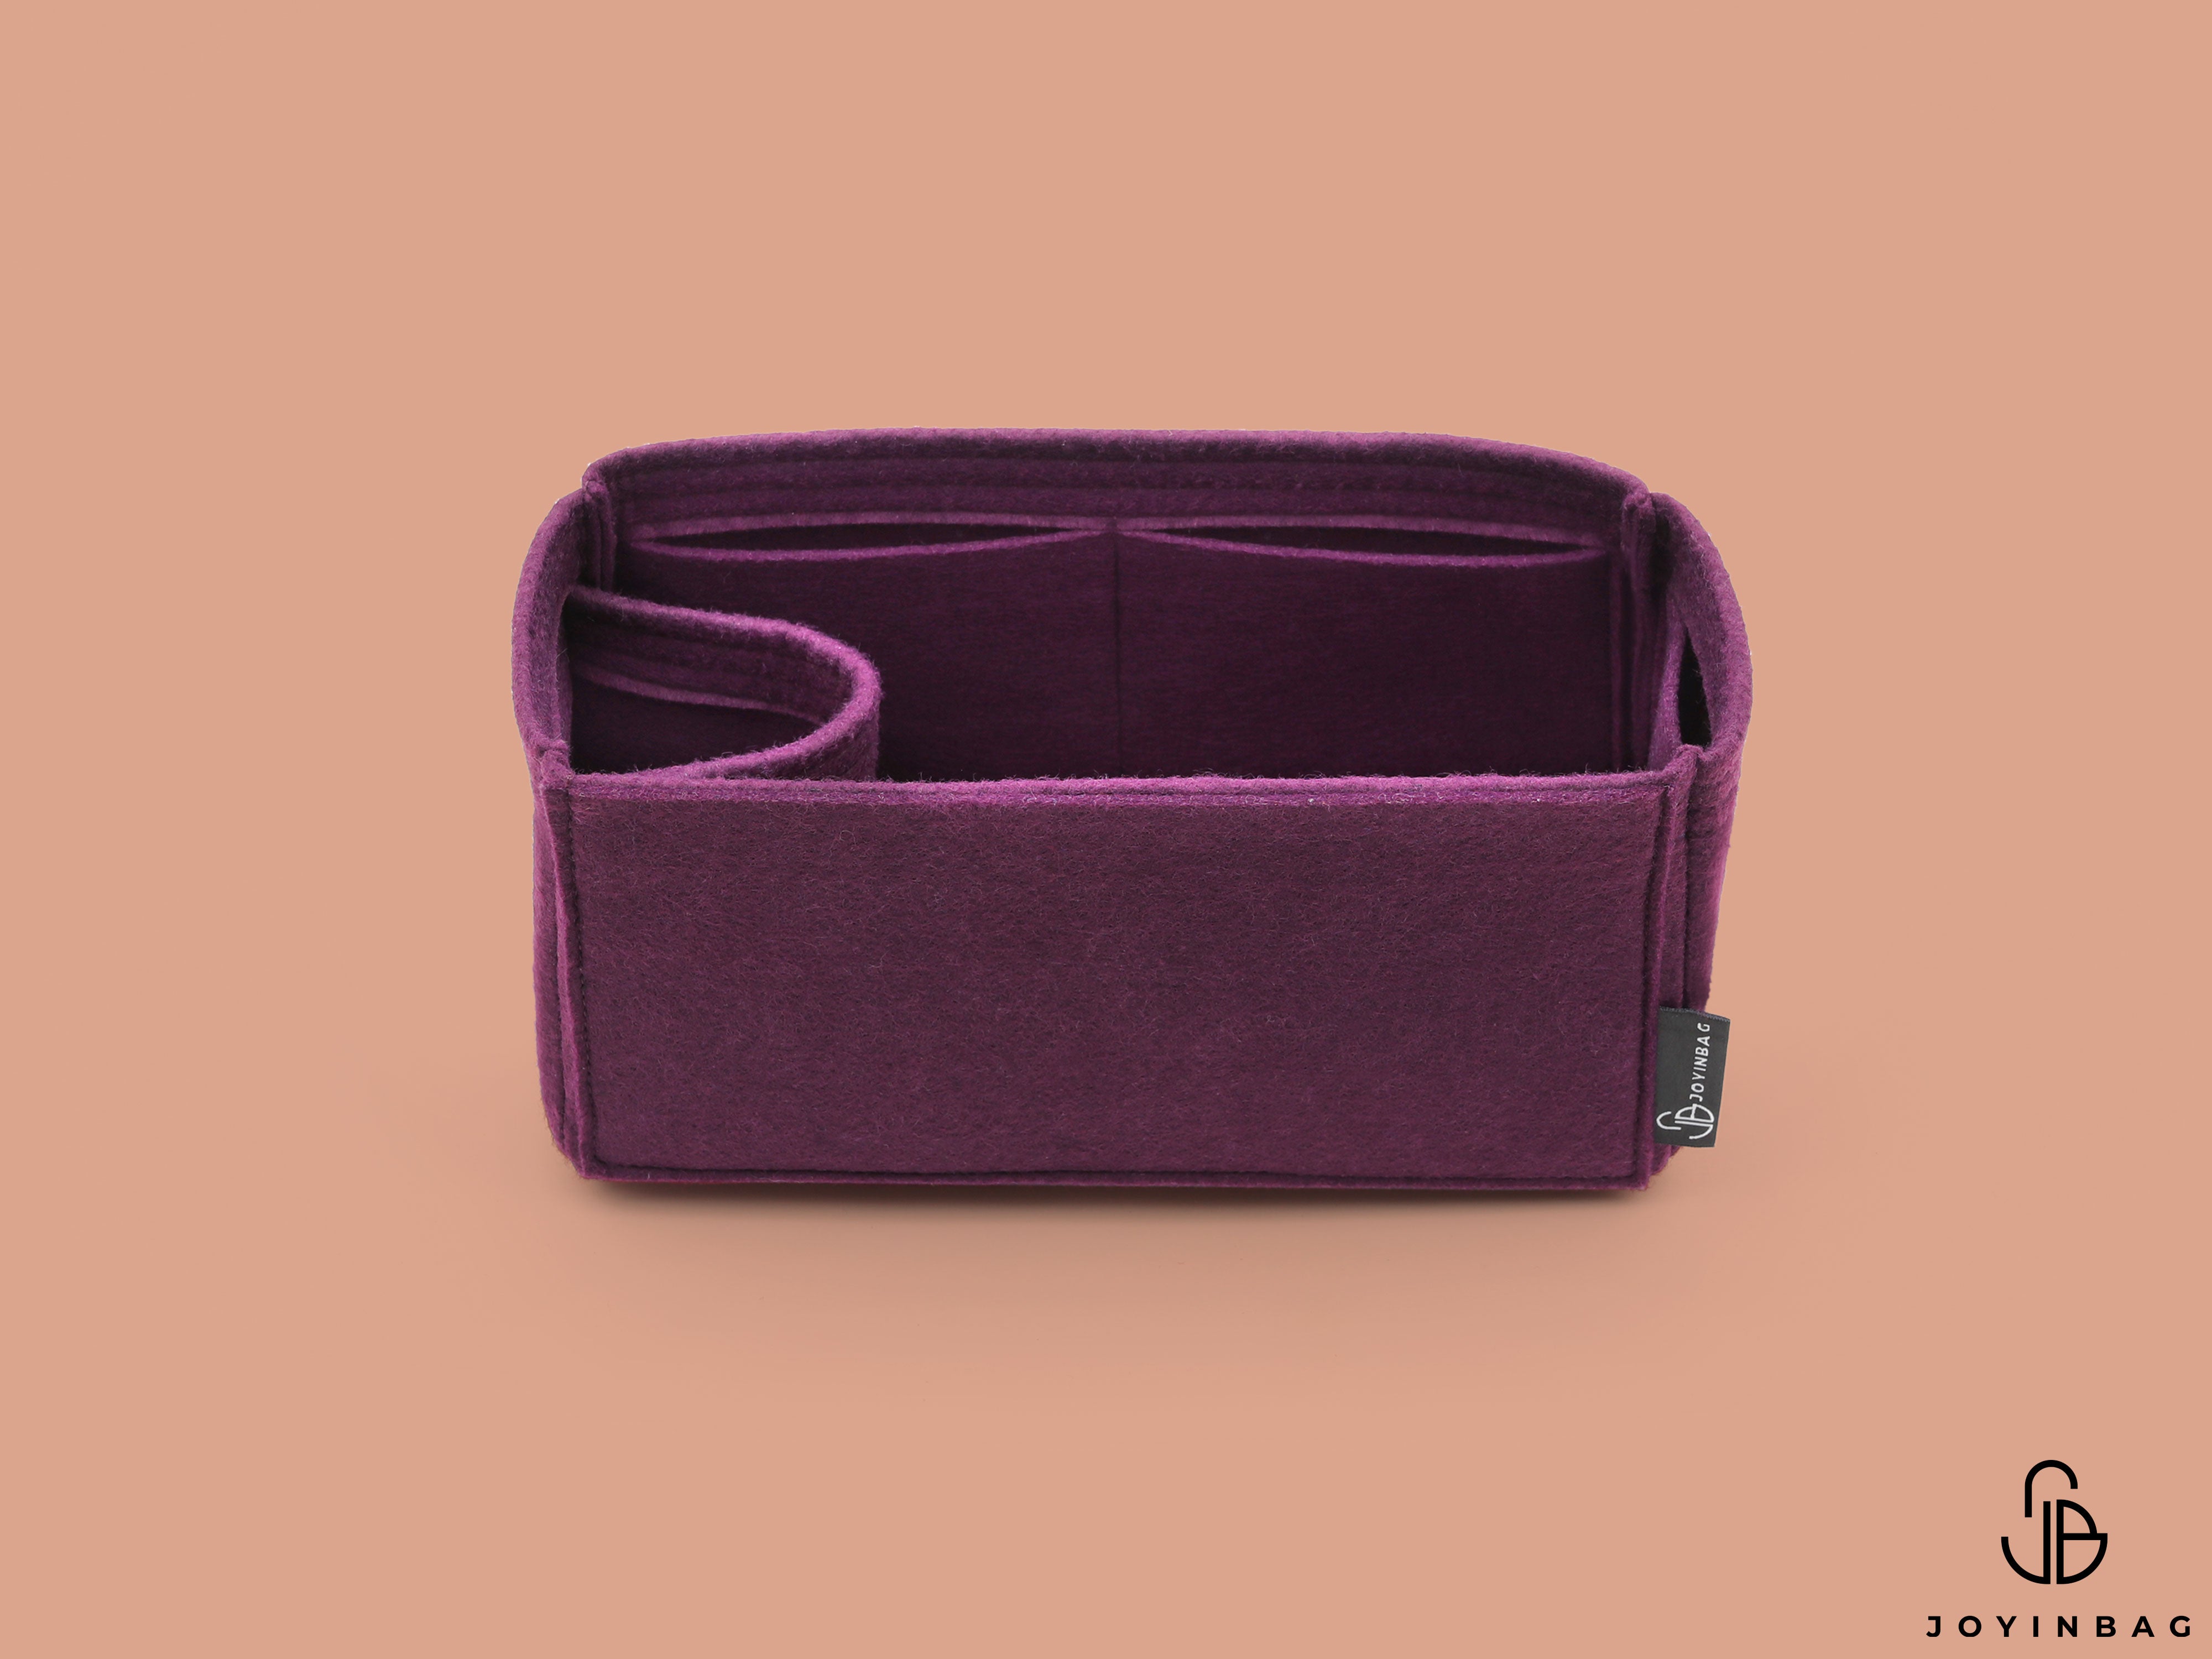 Backpack Insert Organizer Purple